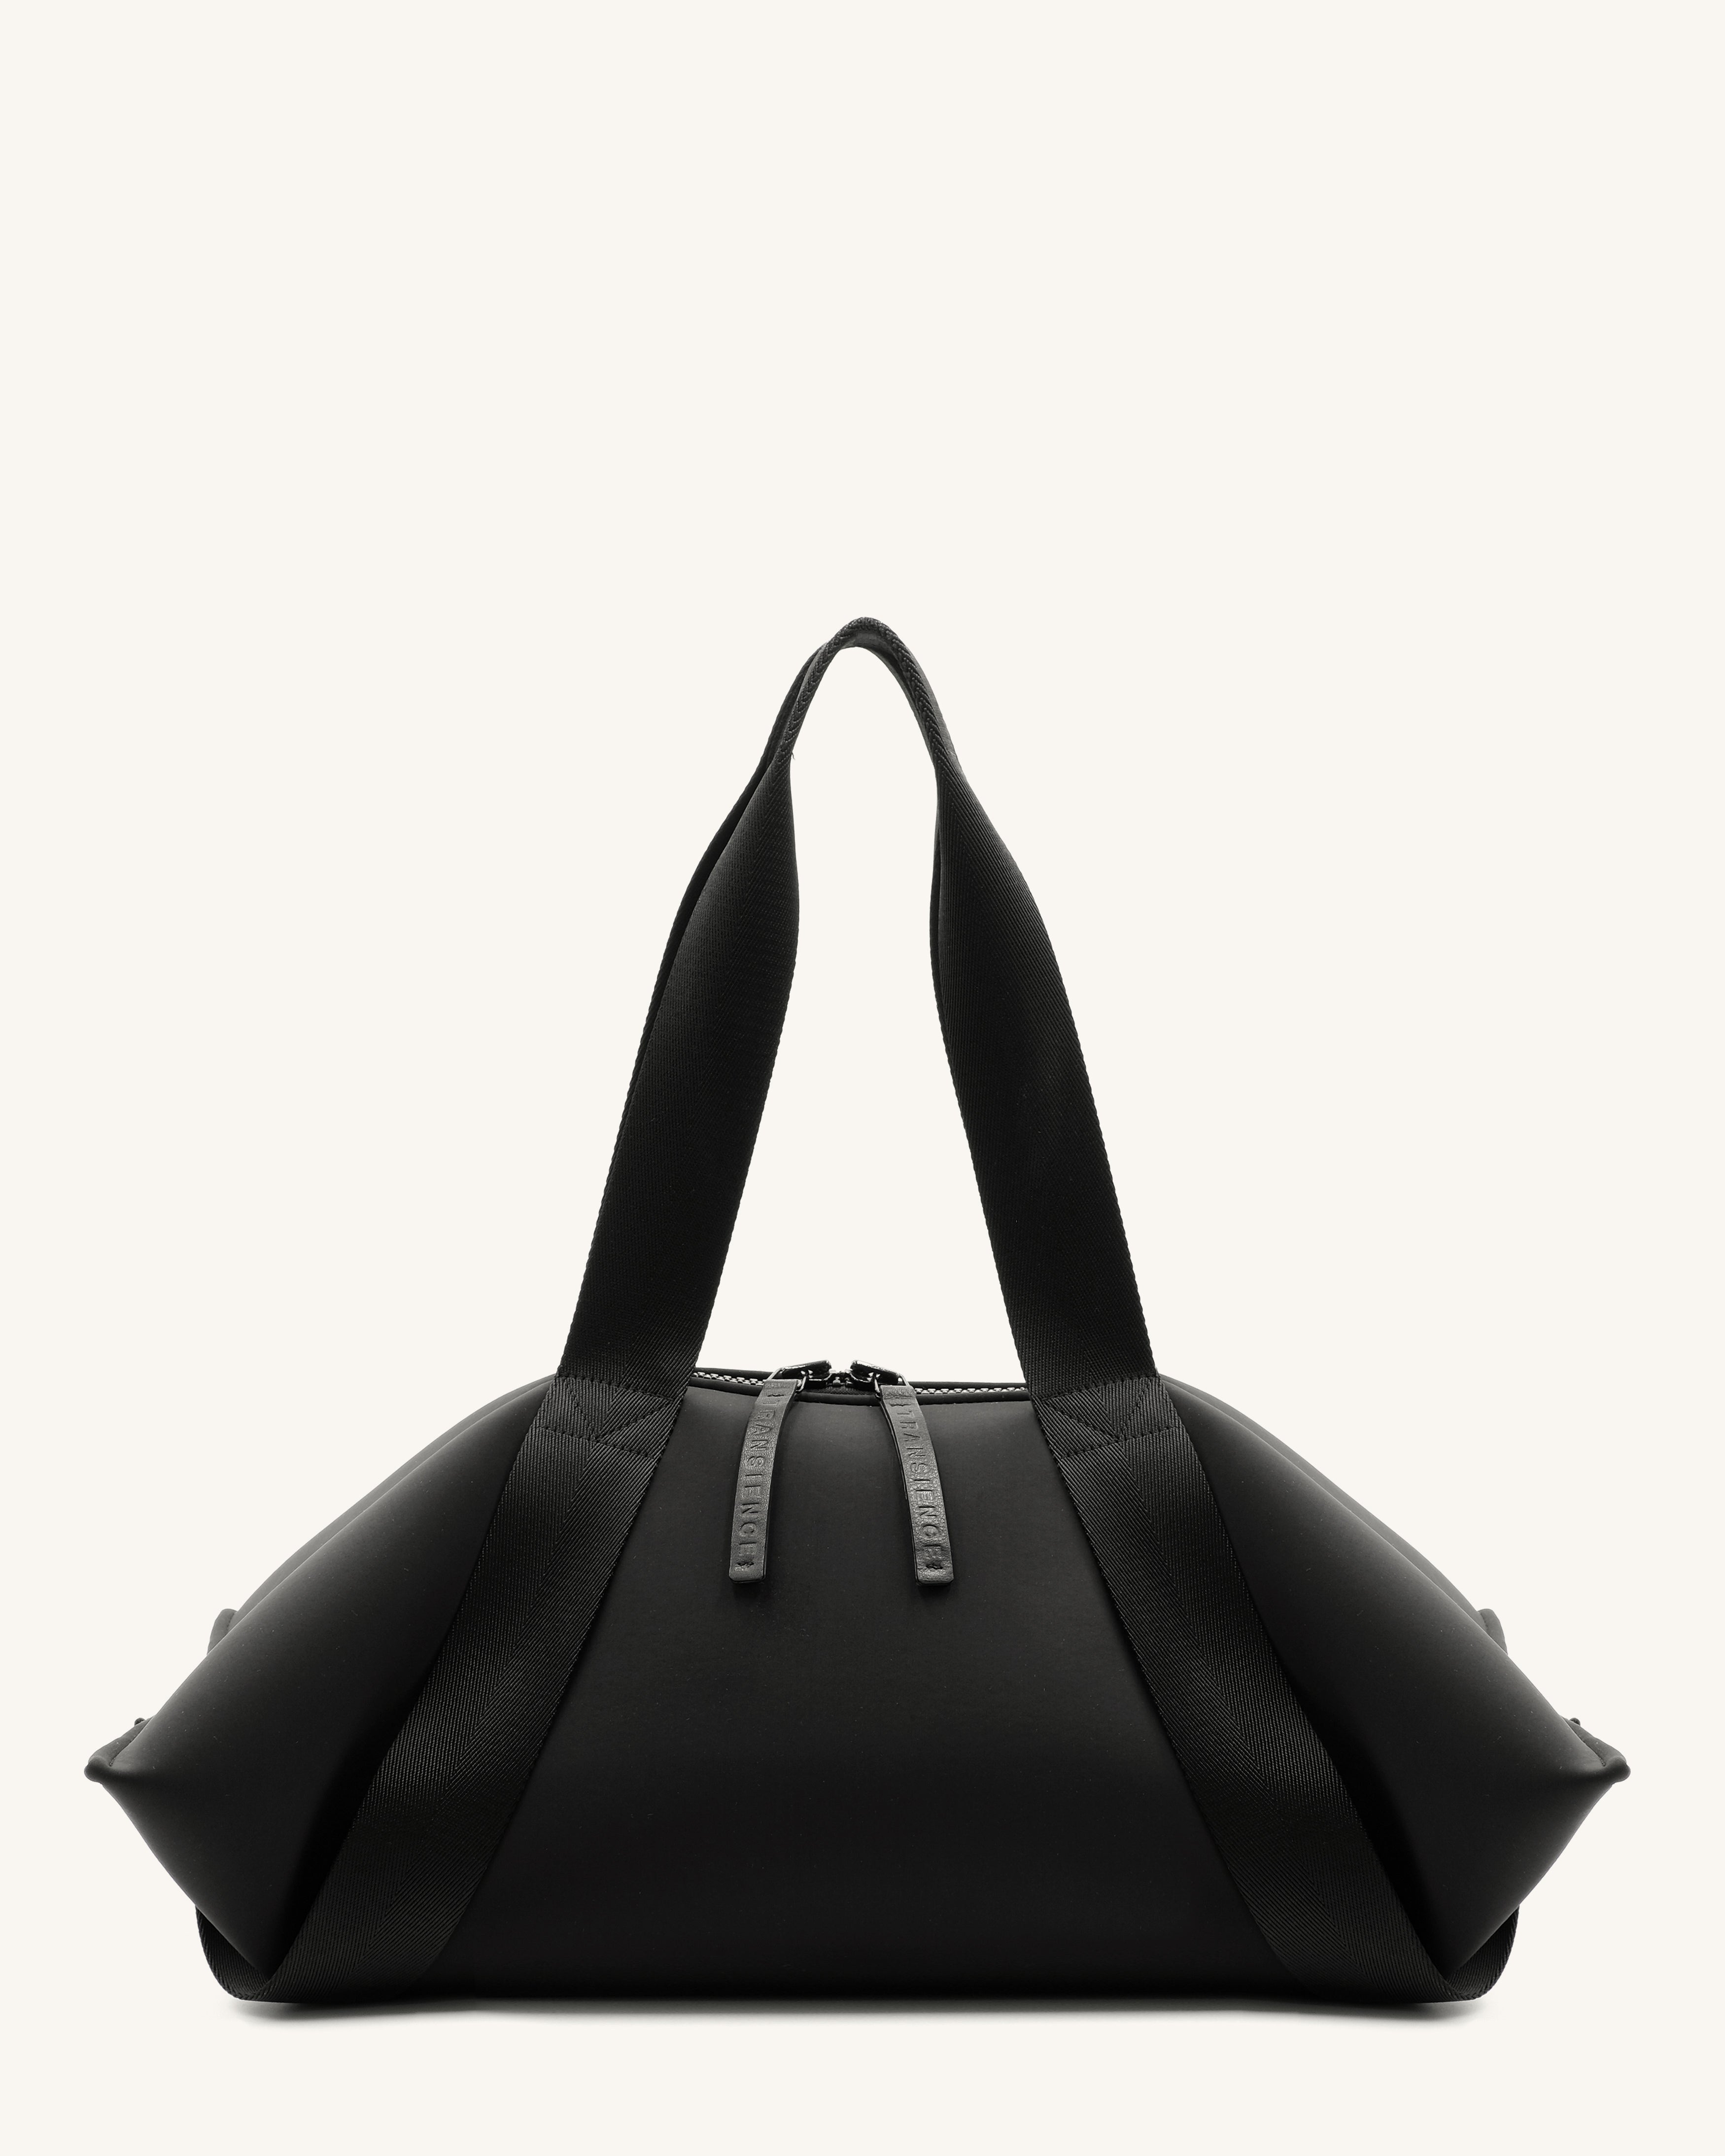 Yoga Mat Bag - Black - Black / One Size